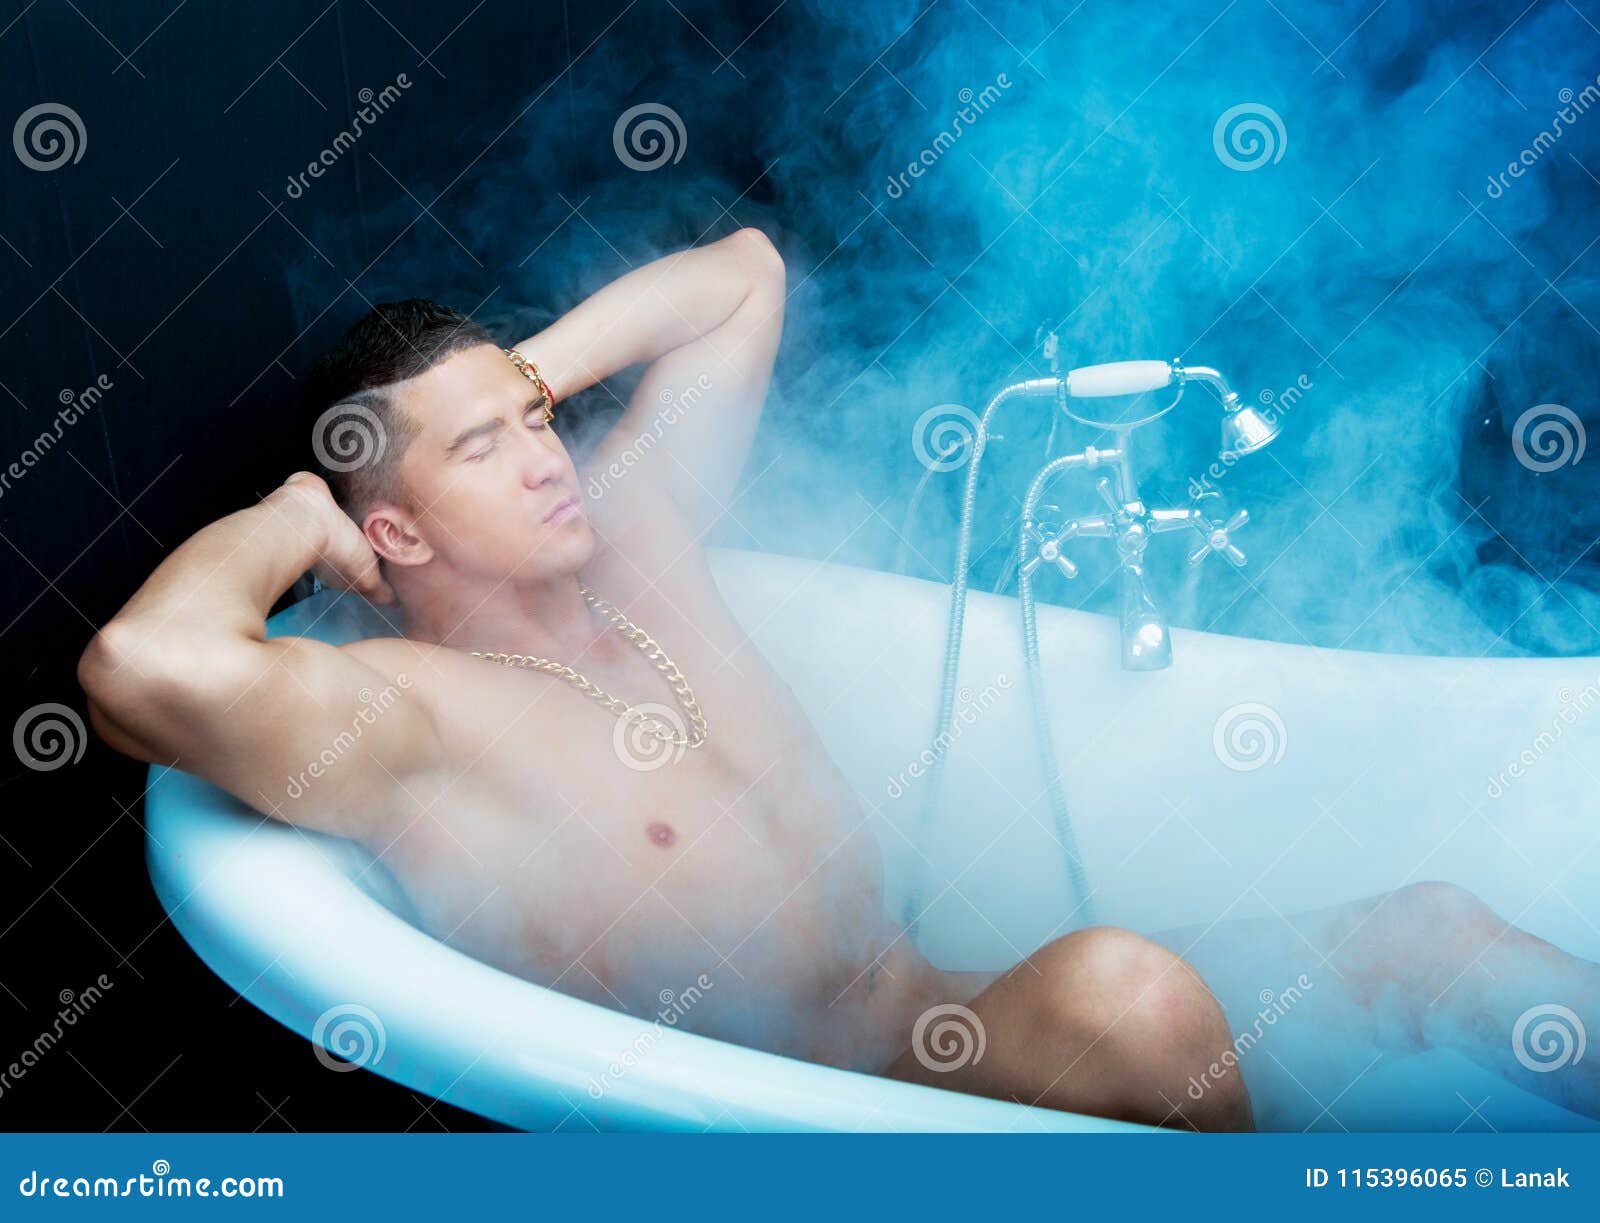 Мужчина принимает ванну. Мужчина в ванне вид сверху.